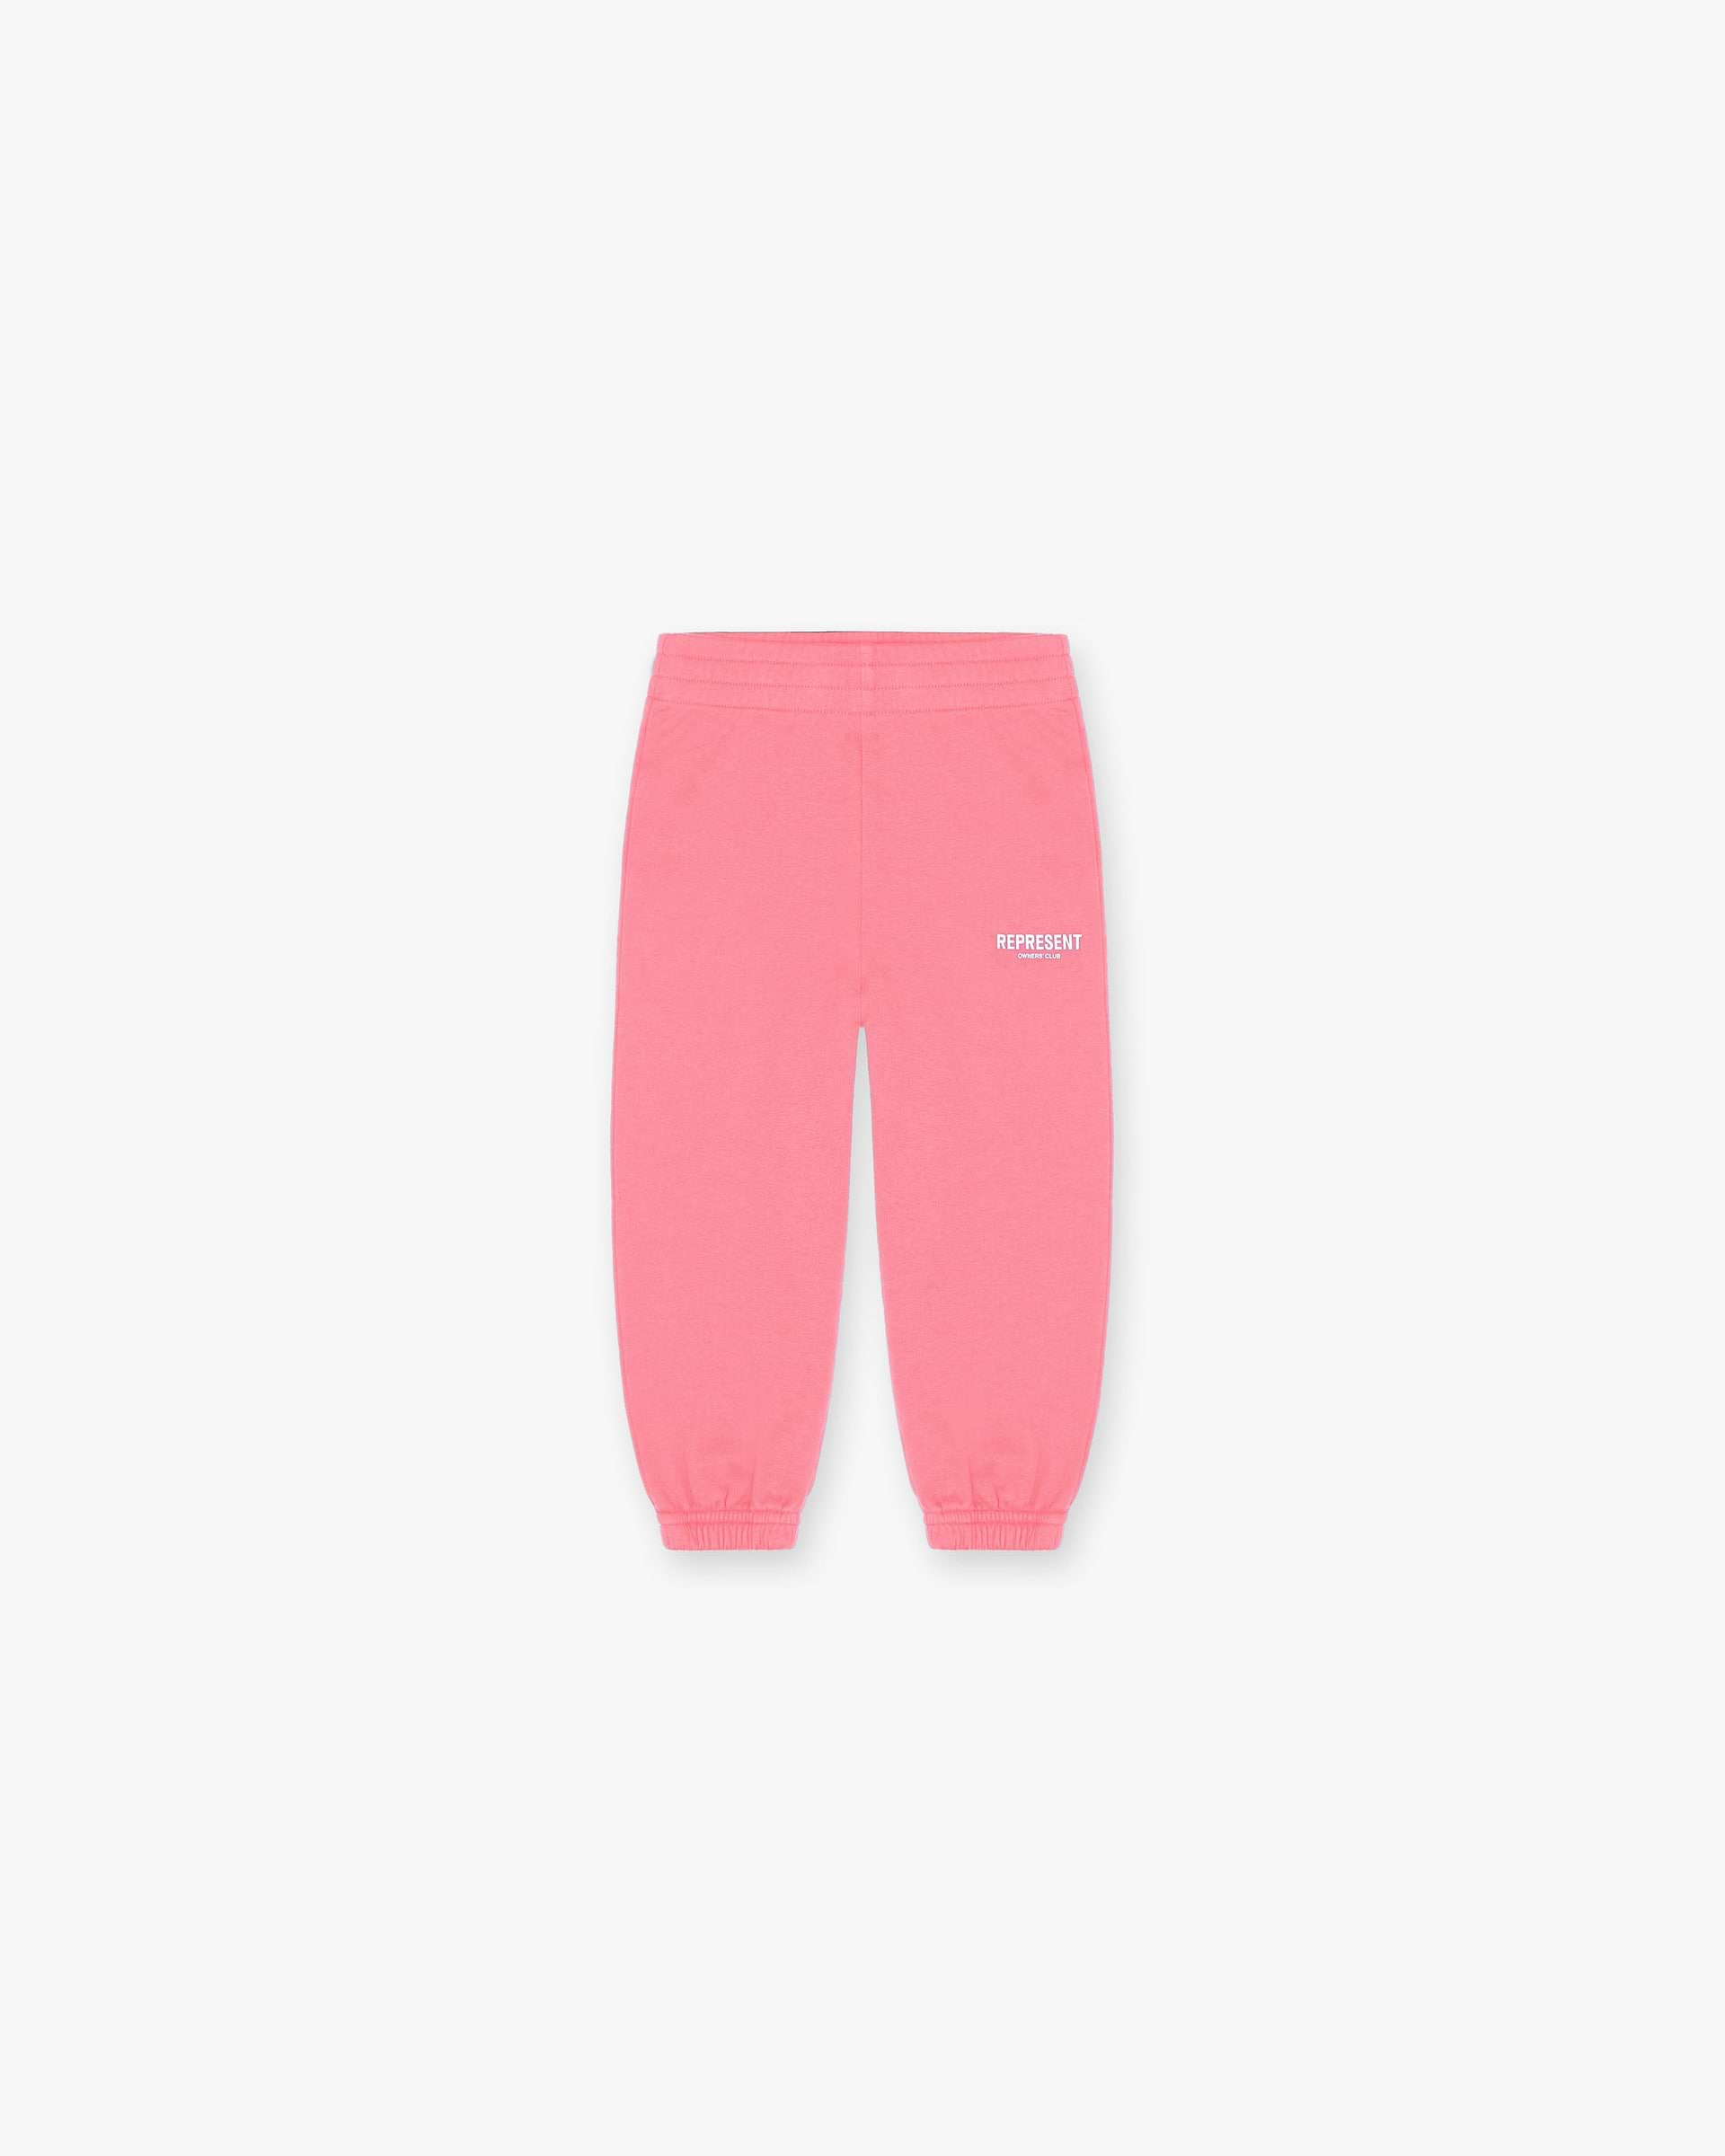 Represent Mini Owners Club Sweatpants | Bubblegum Pink Pants Owners Club | Represent Clo